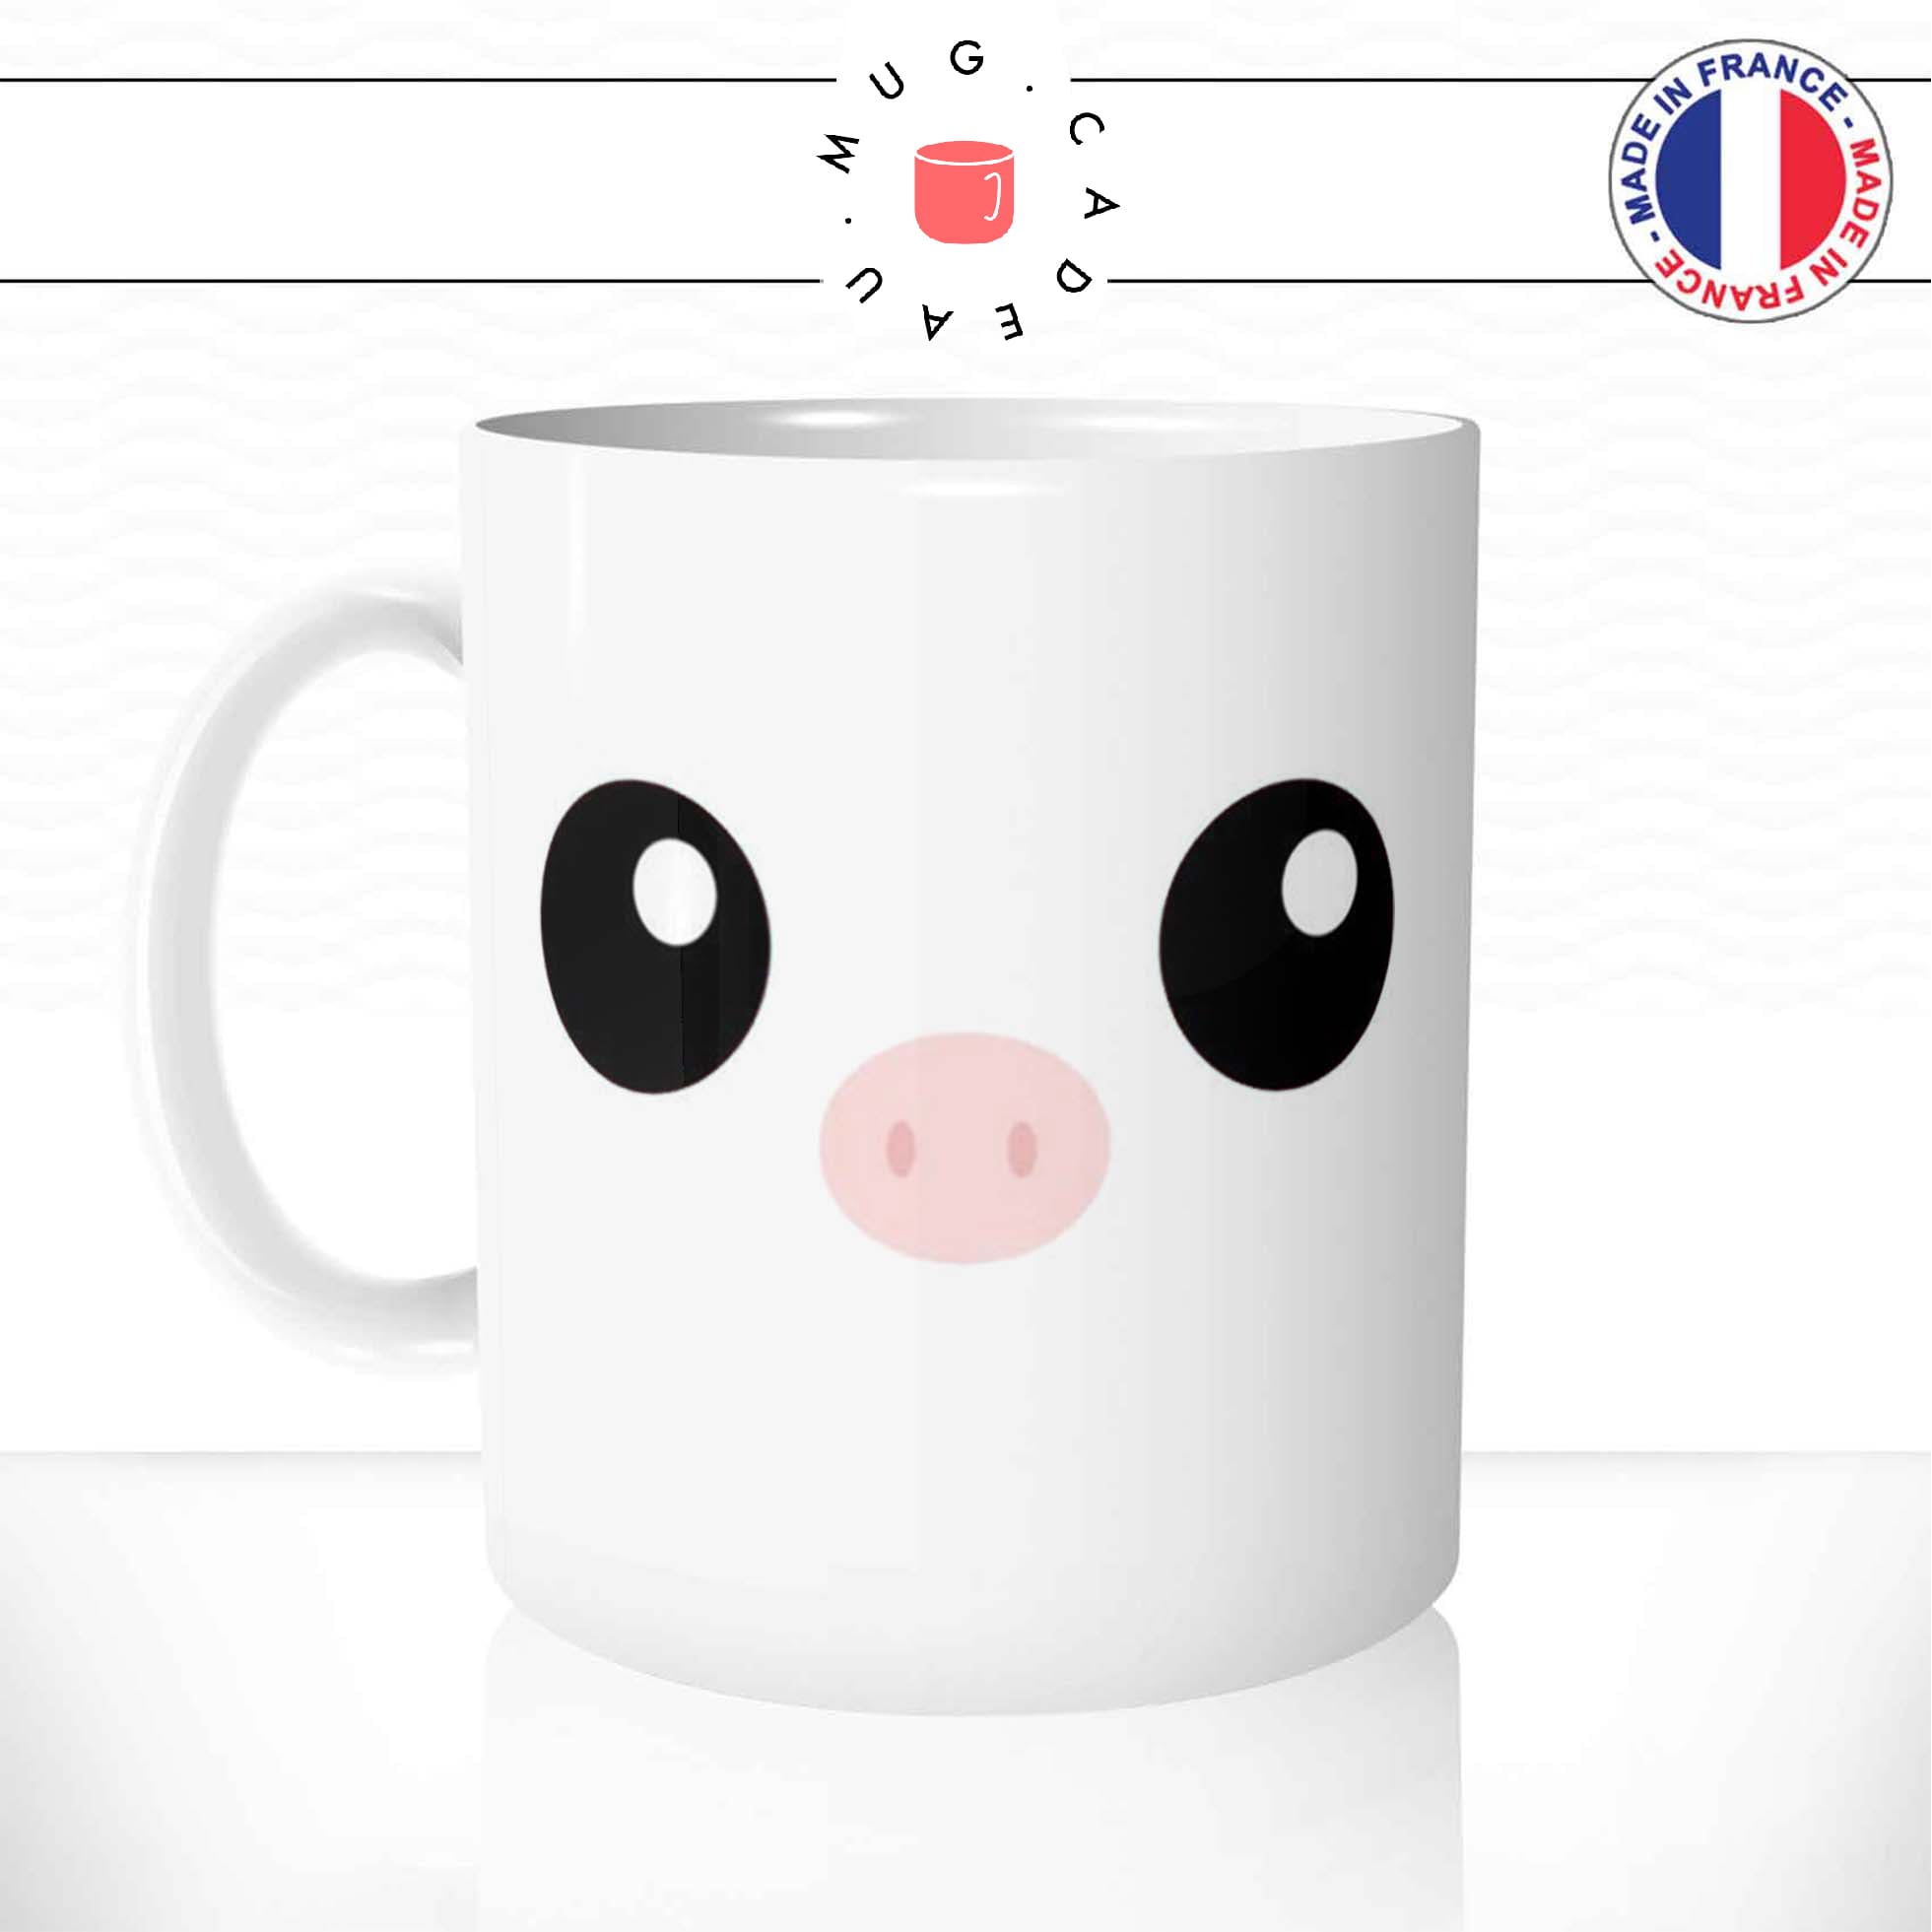 mug-tasse-ref1-cochon-yeux-nez-cute-cafe-the-mugs-tasses-personnalise-anse-gauche-min